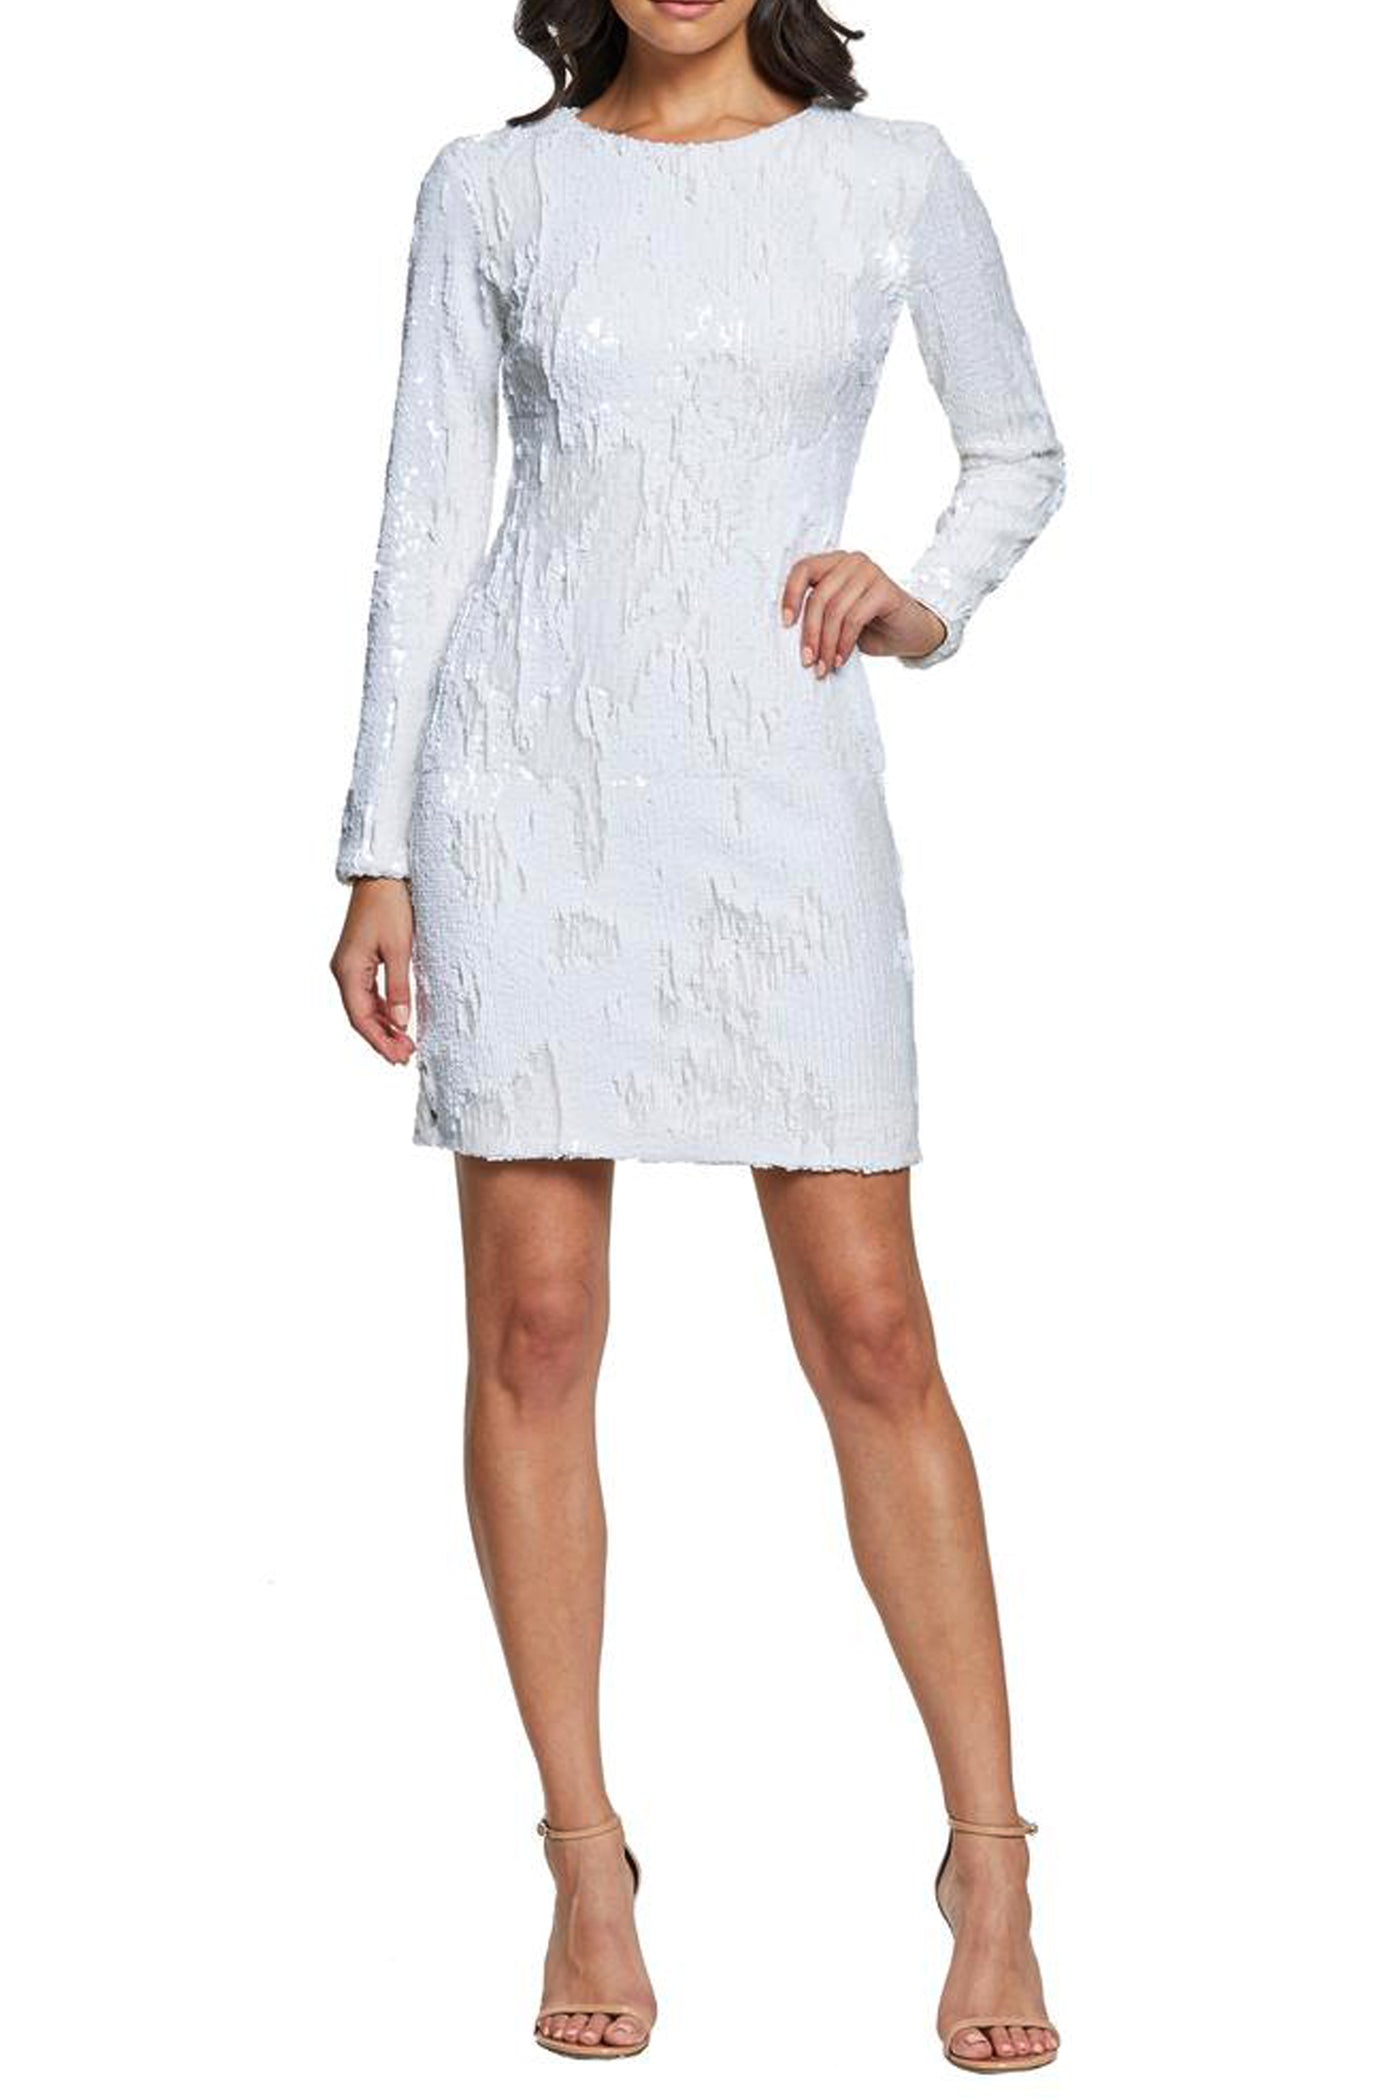 Kurkova White Sequin Mini Dress by Dress The Population - RENTAL